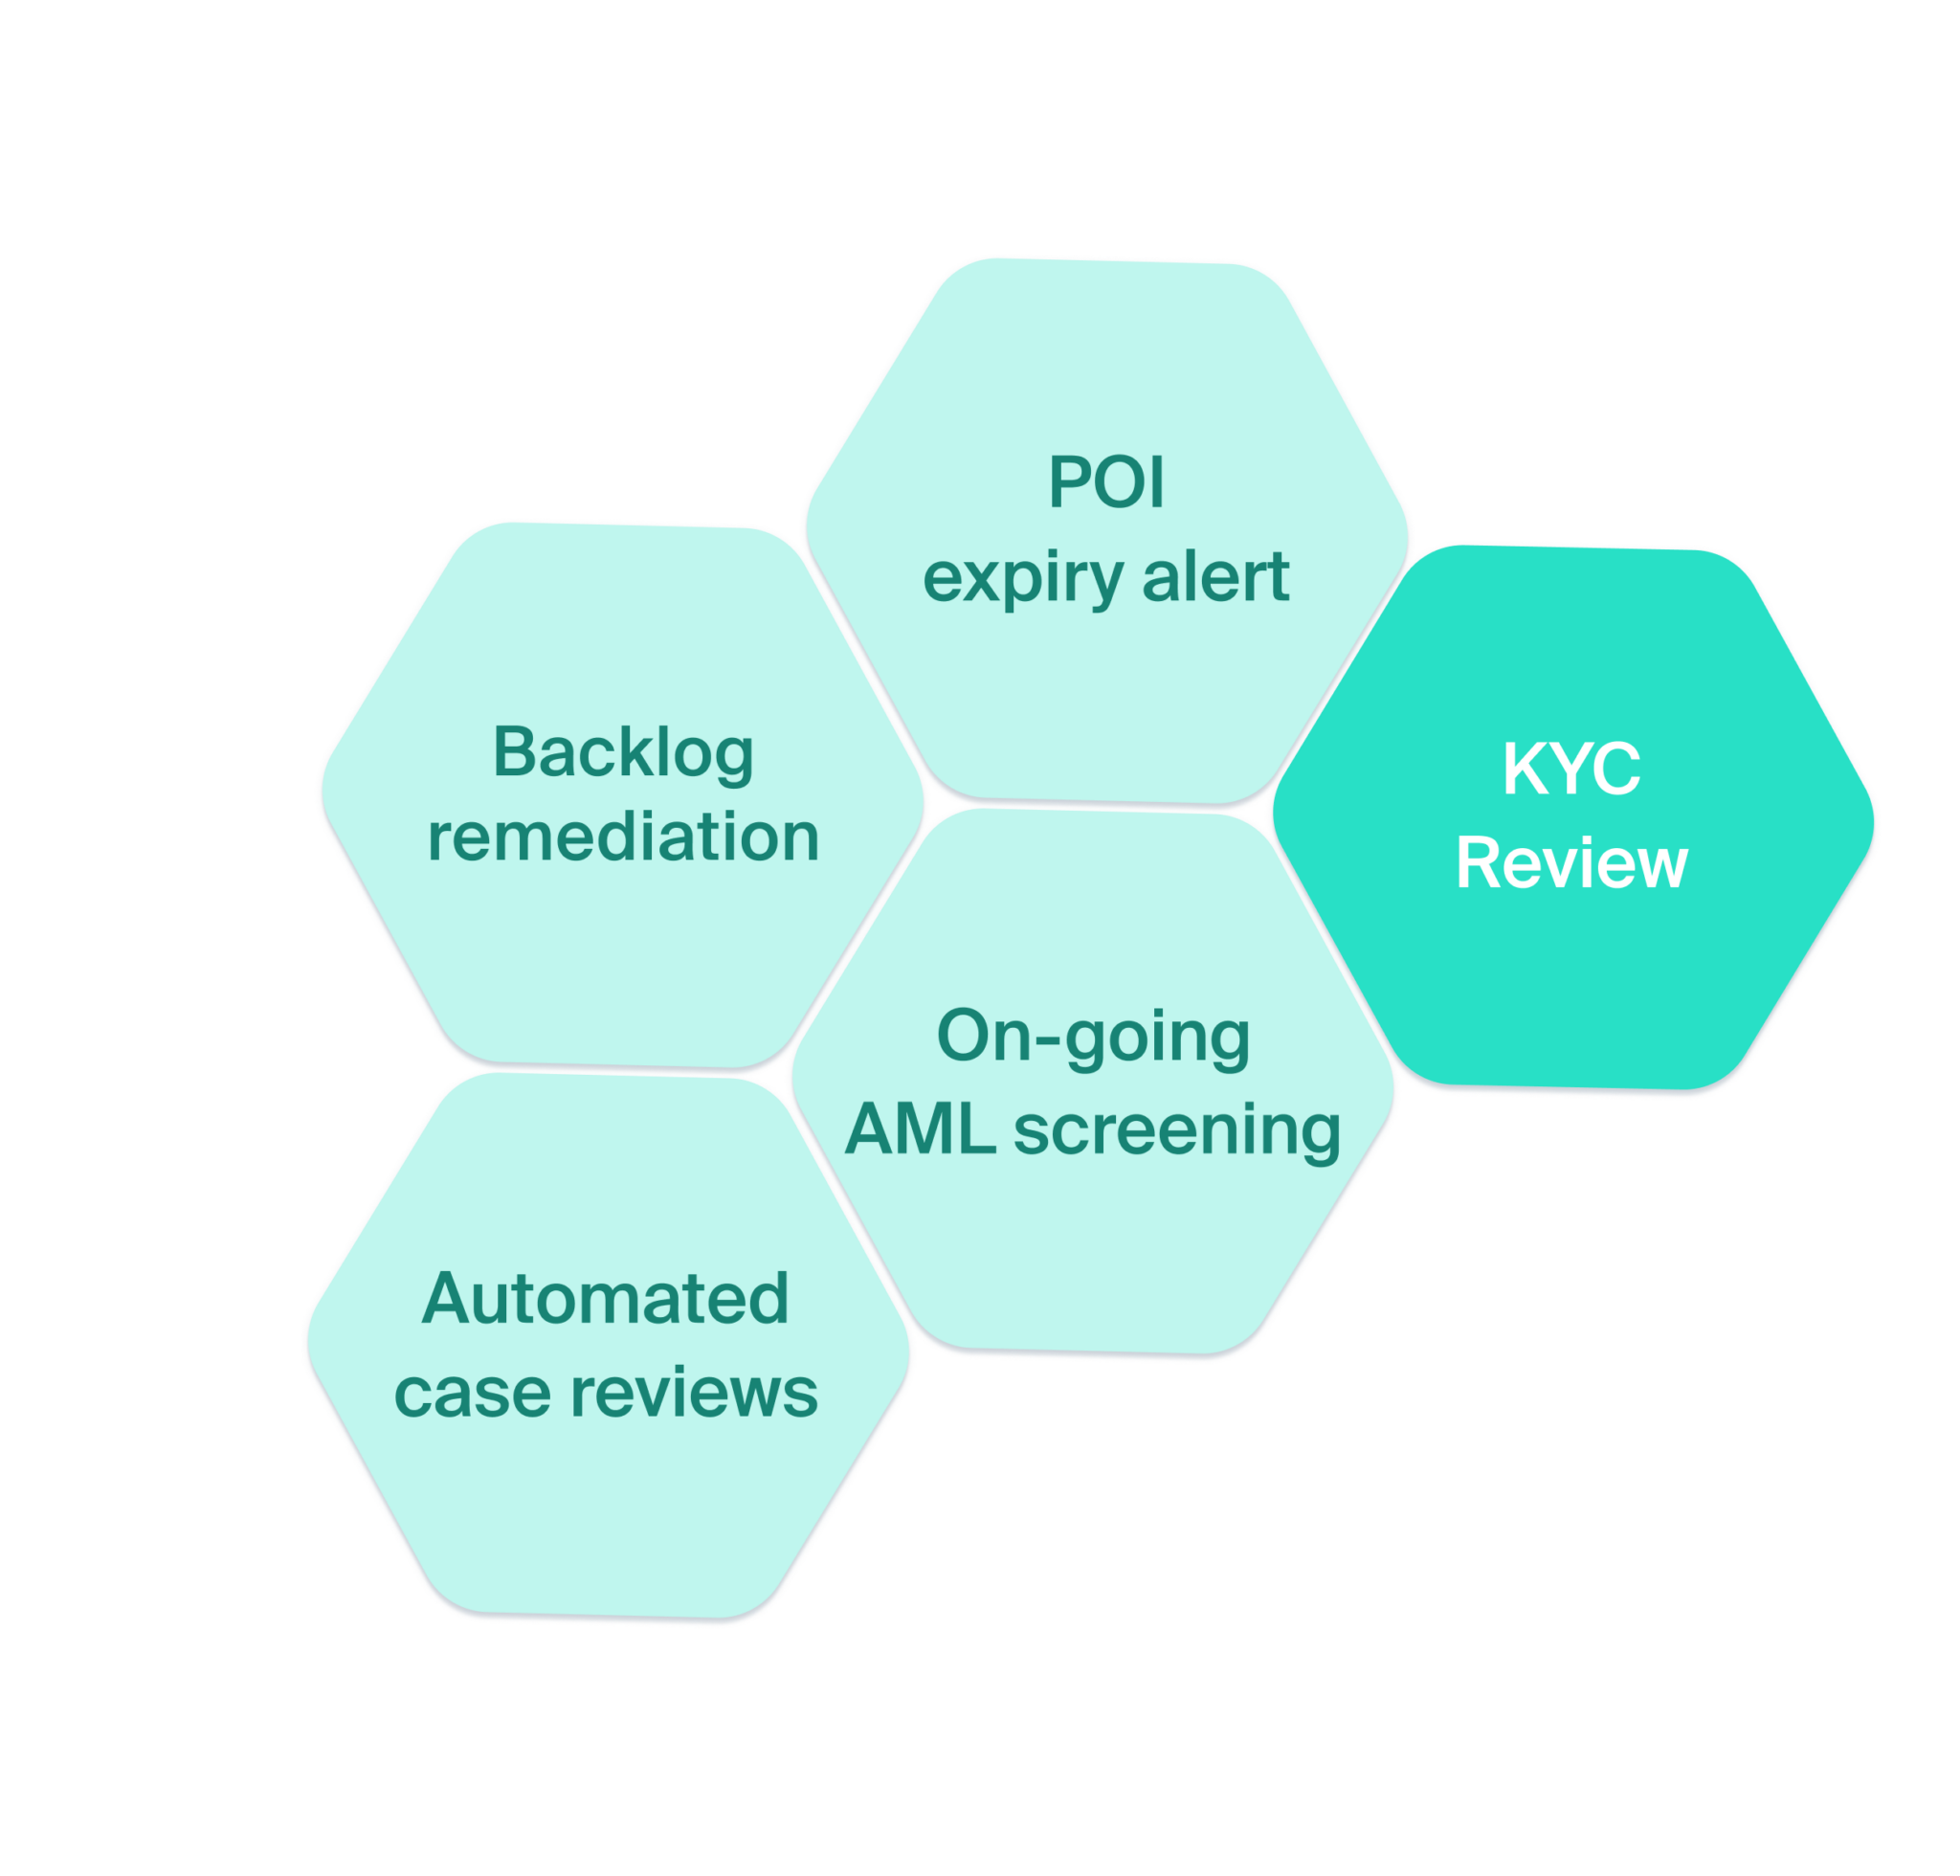 KYC Review modules list